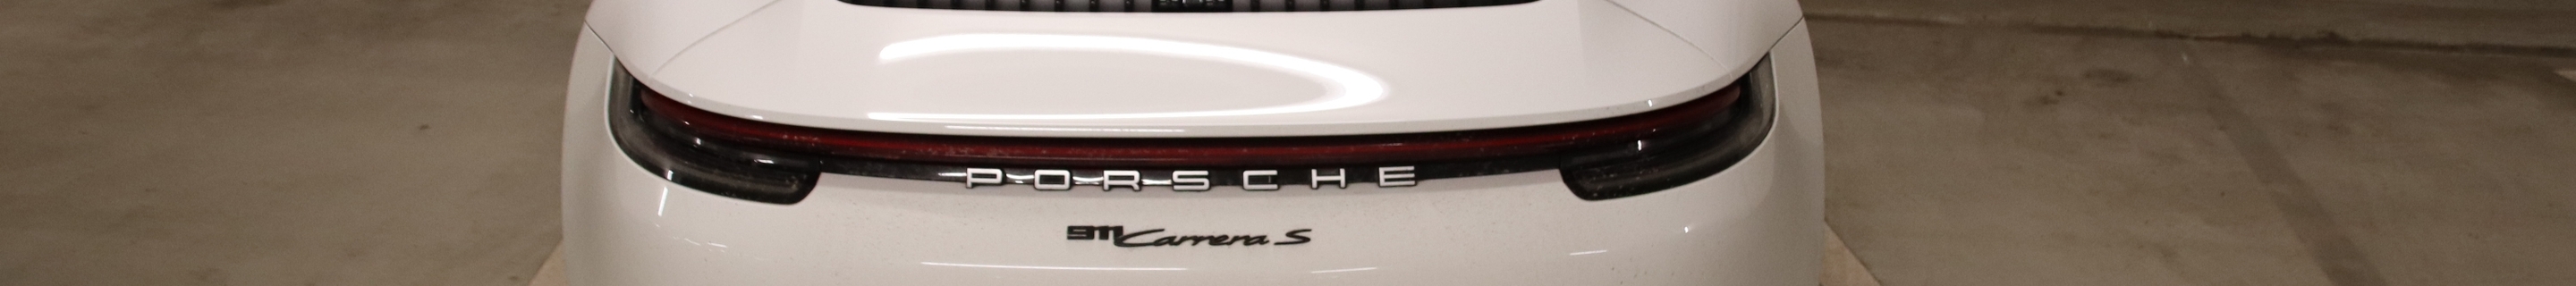 Porsche 992 Carrera S